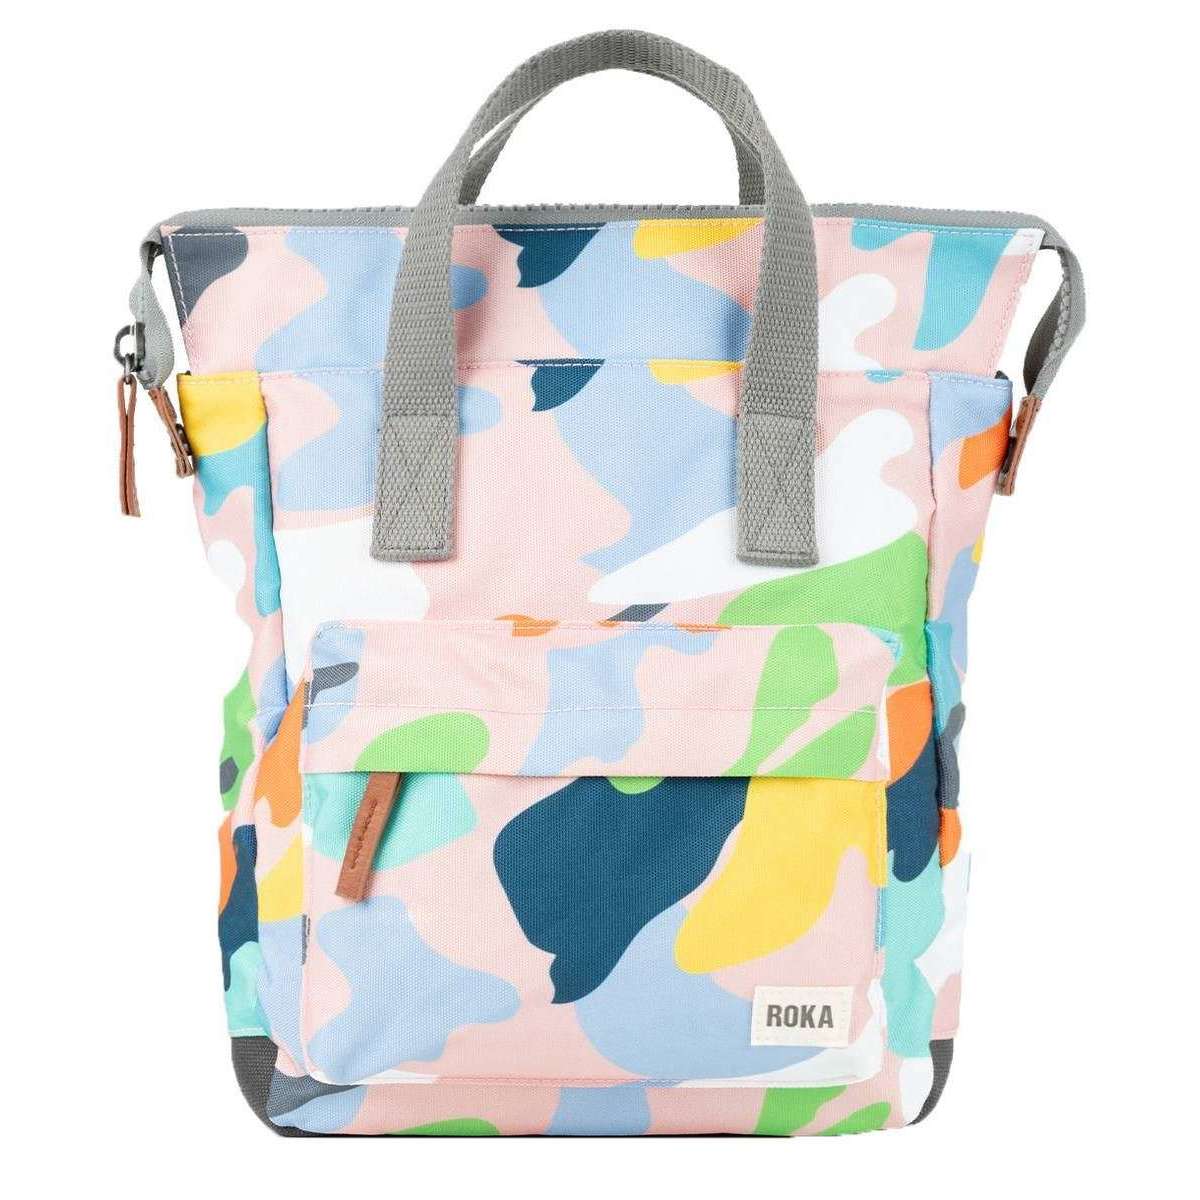 Roka Bantry B Small Mellow Camo Sustainable Canvas Backpack - White/Blue/Orange